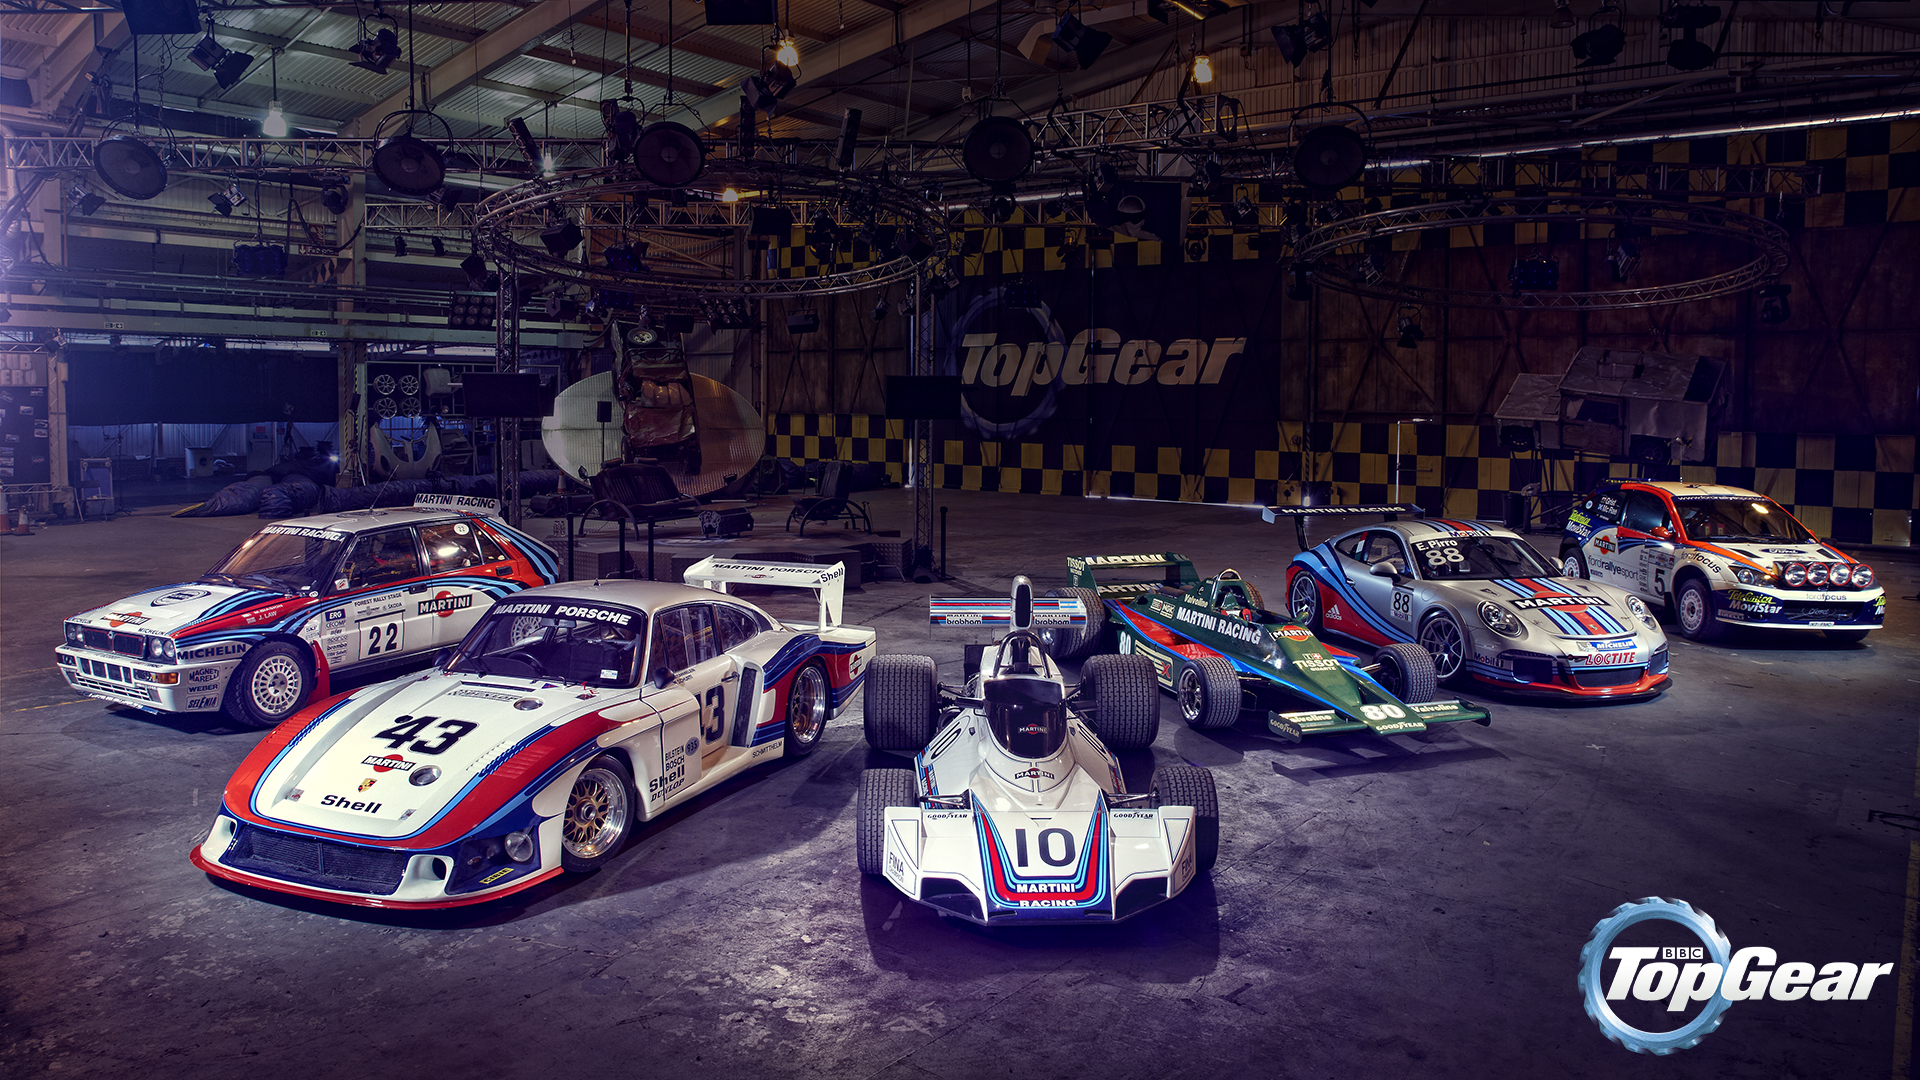 Exclusive wallpaper: Martini race cars